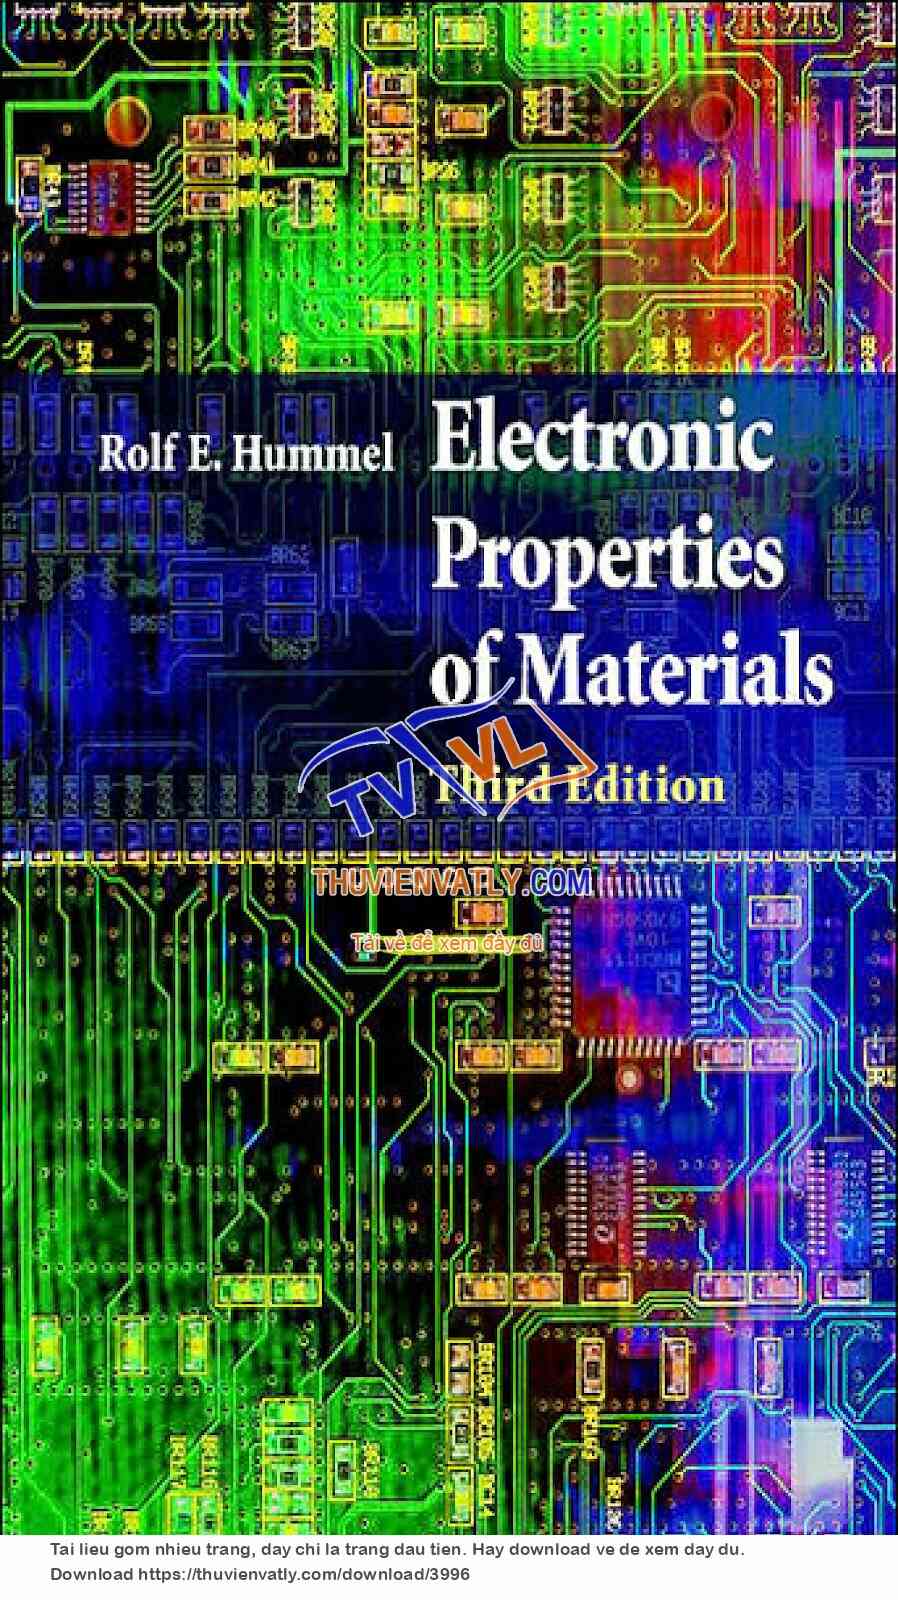 Electronic Properties Of Materials (Rolf E. Hummel)